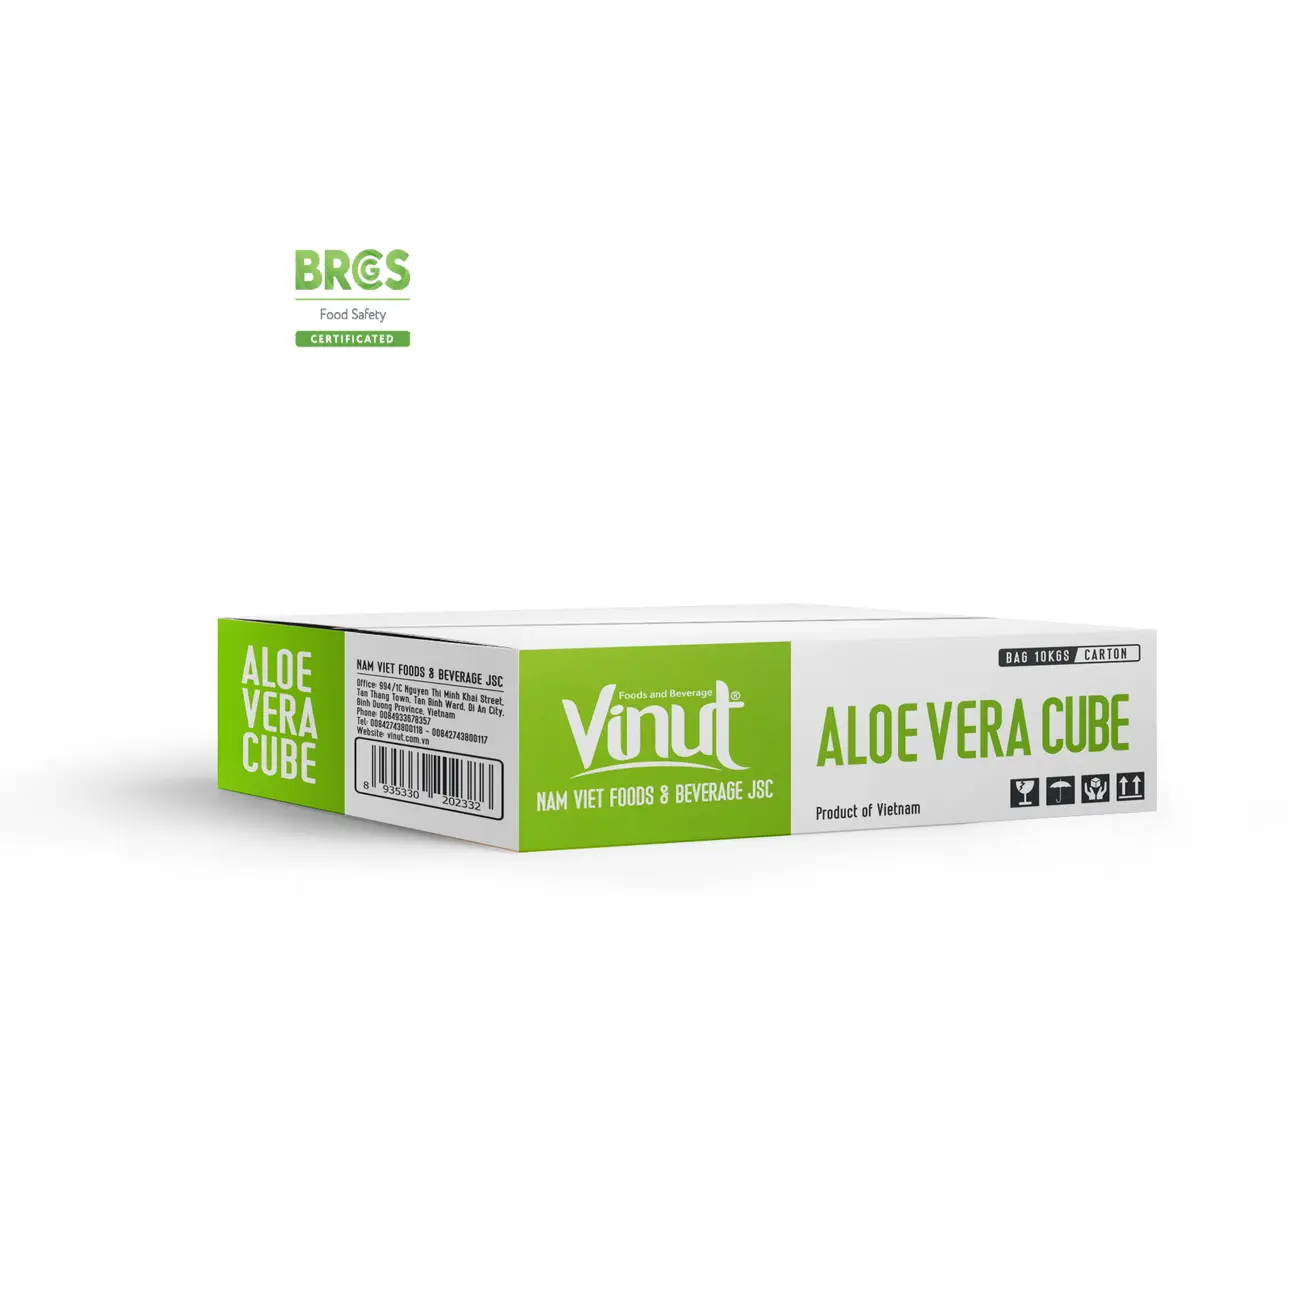 10Kg Bag/Carton VINUT 4x4mm Premium Quality Aloe vera cube 100% Natural Suppliers and Manufacturers